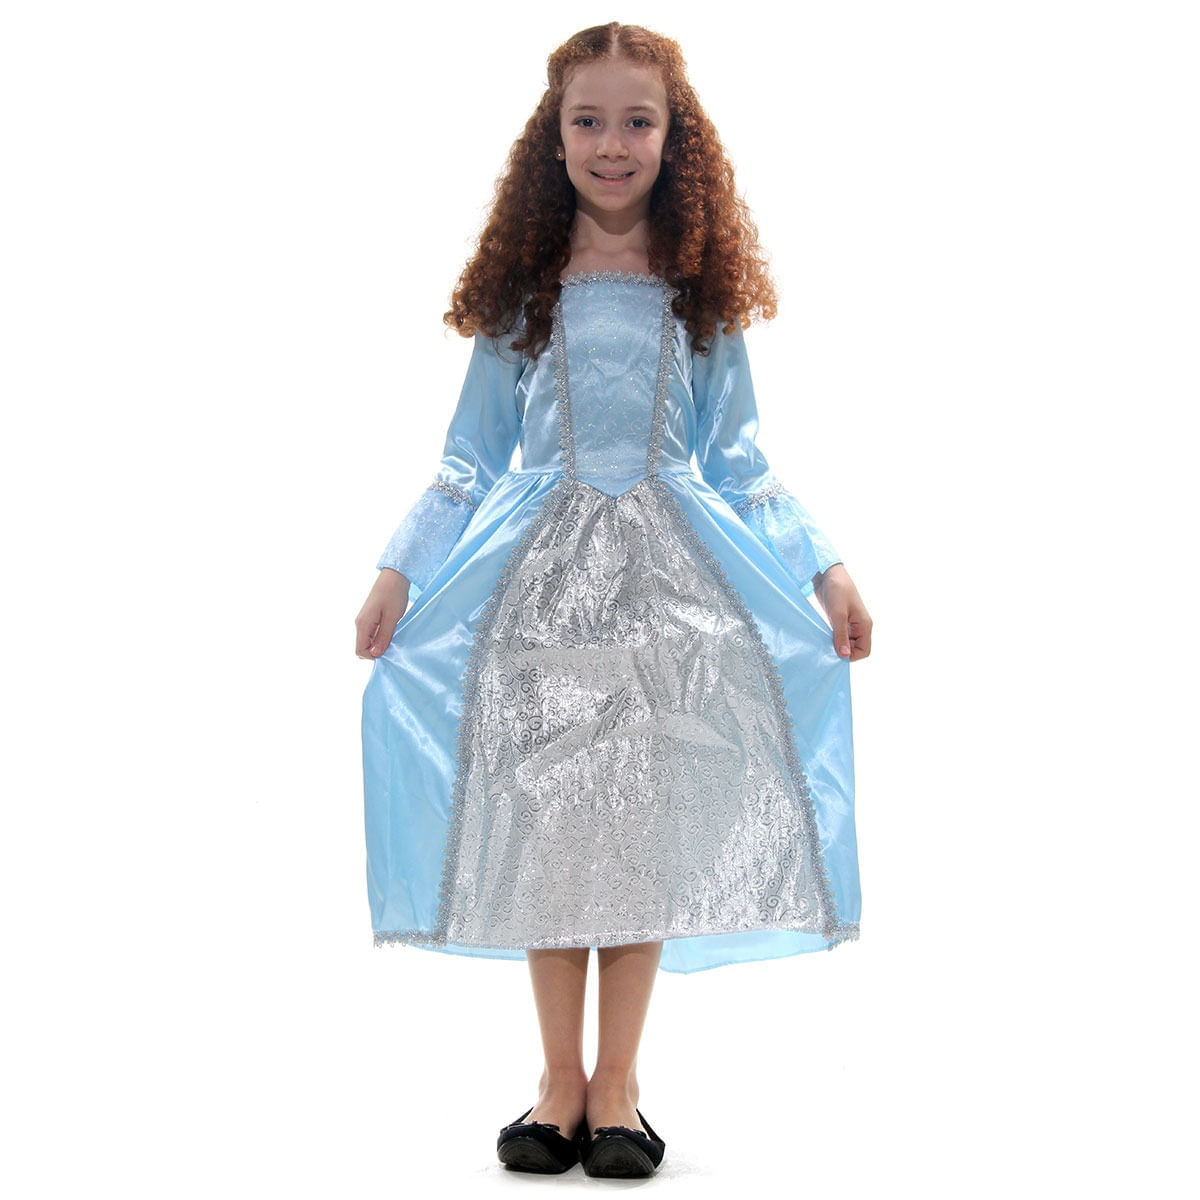 Paper Doll Imã Infantil Menina - Azul